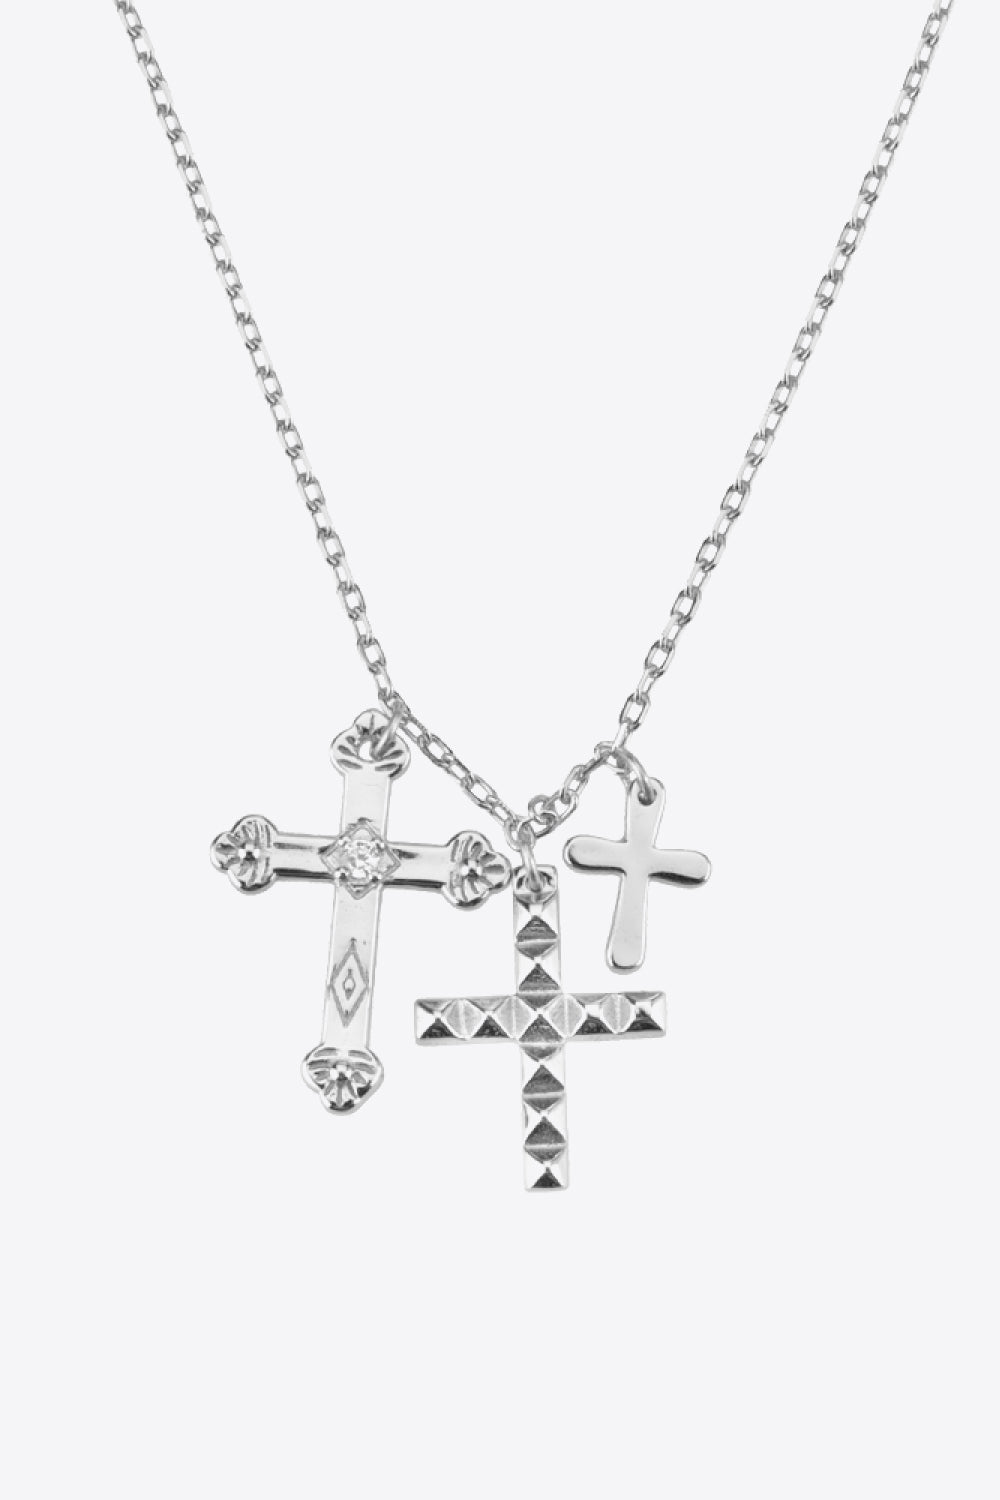 Inlaid Zircon Cross Pendant Necklace - Necklaces - FITGGINS